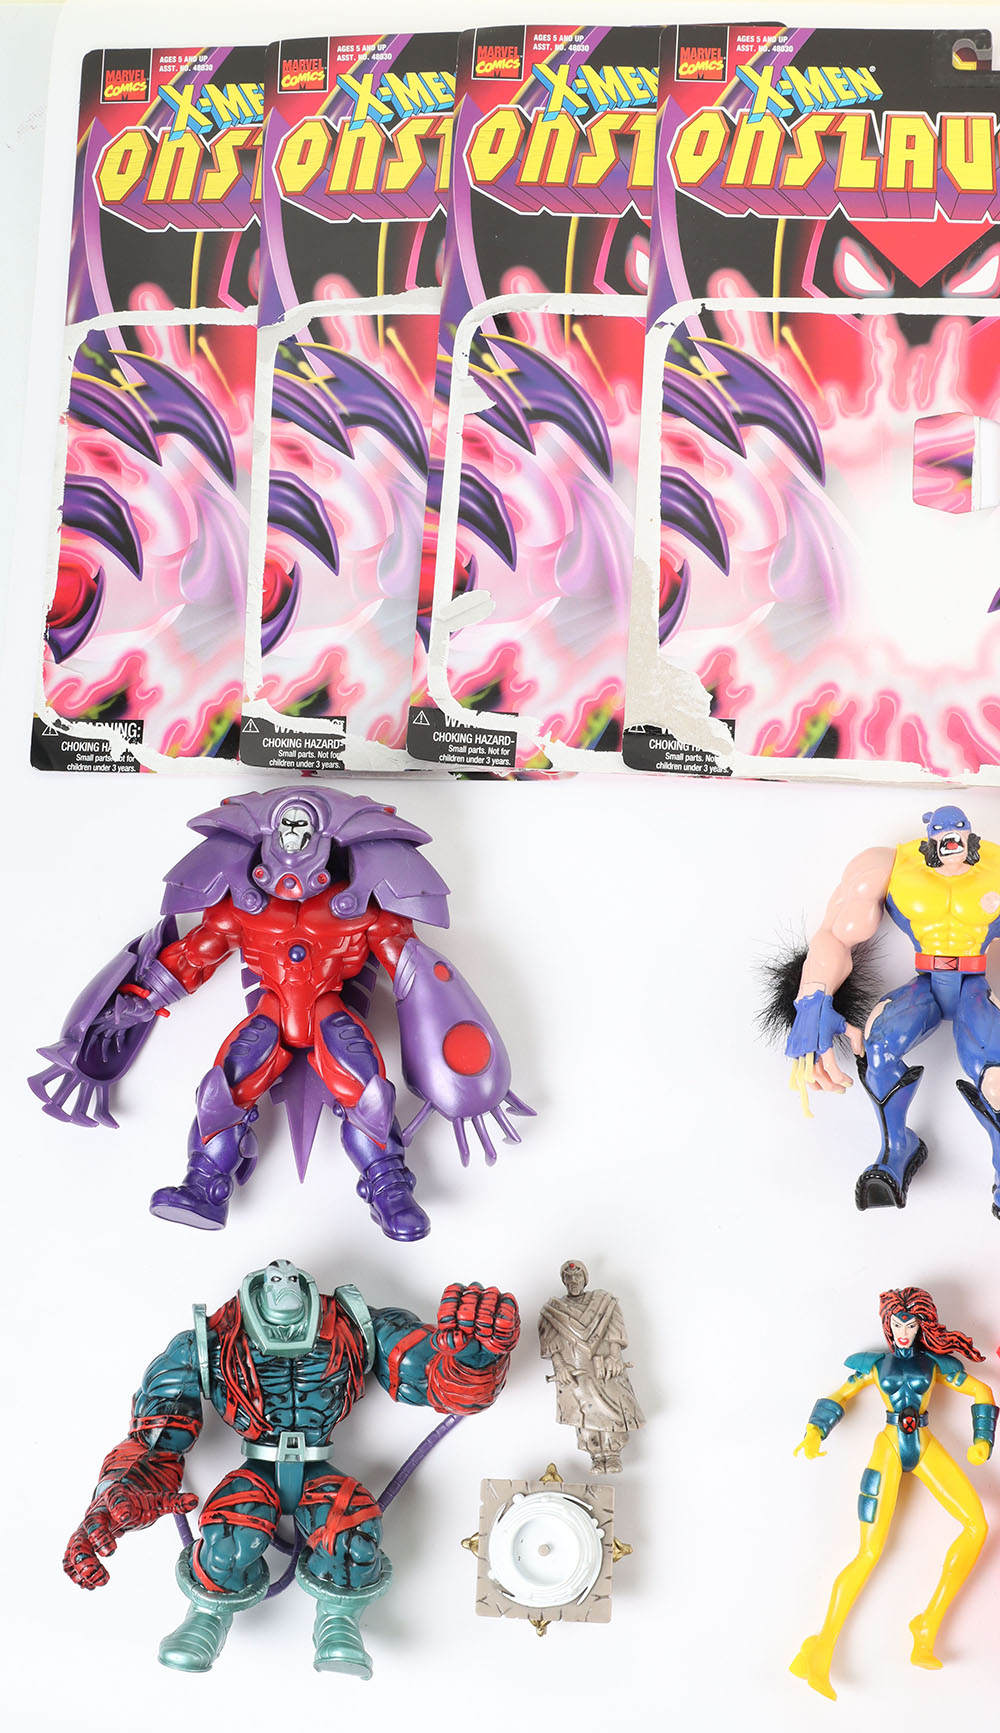 X-men Toybiz Mixed series figures - Image 5 of 5